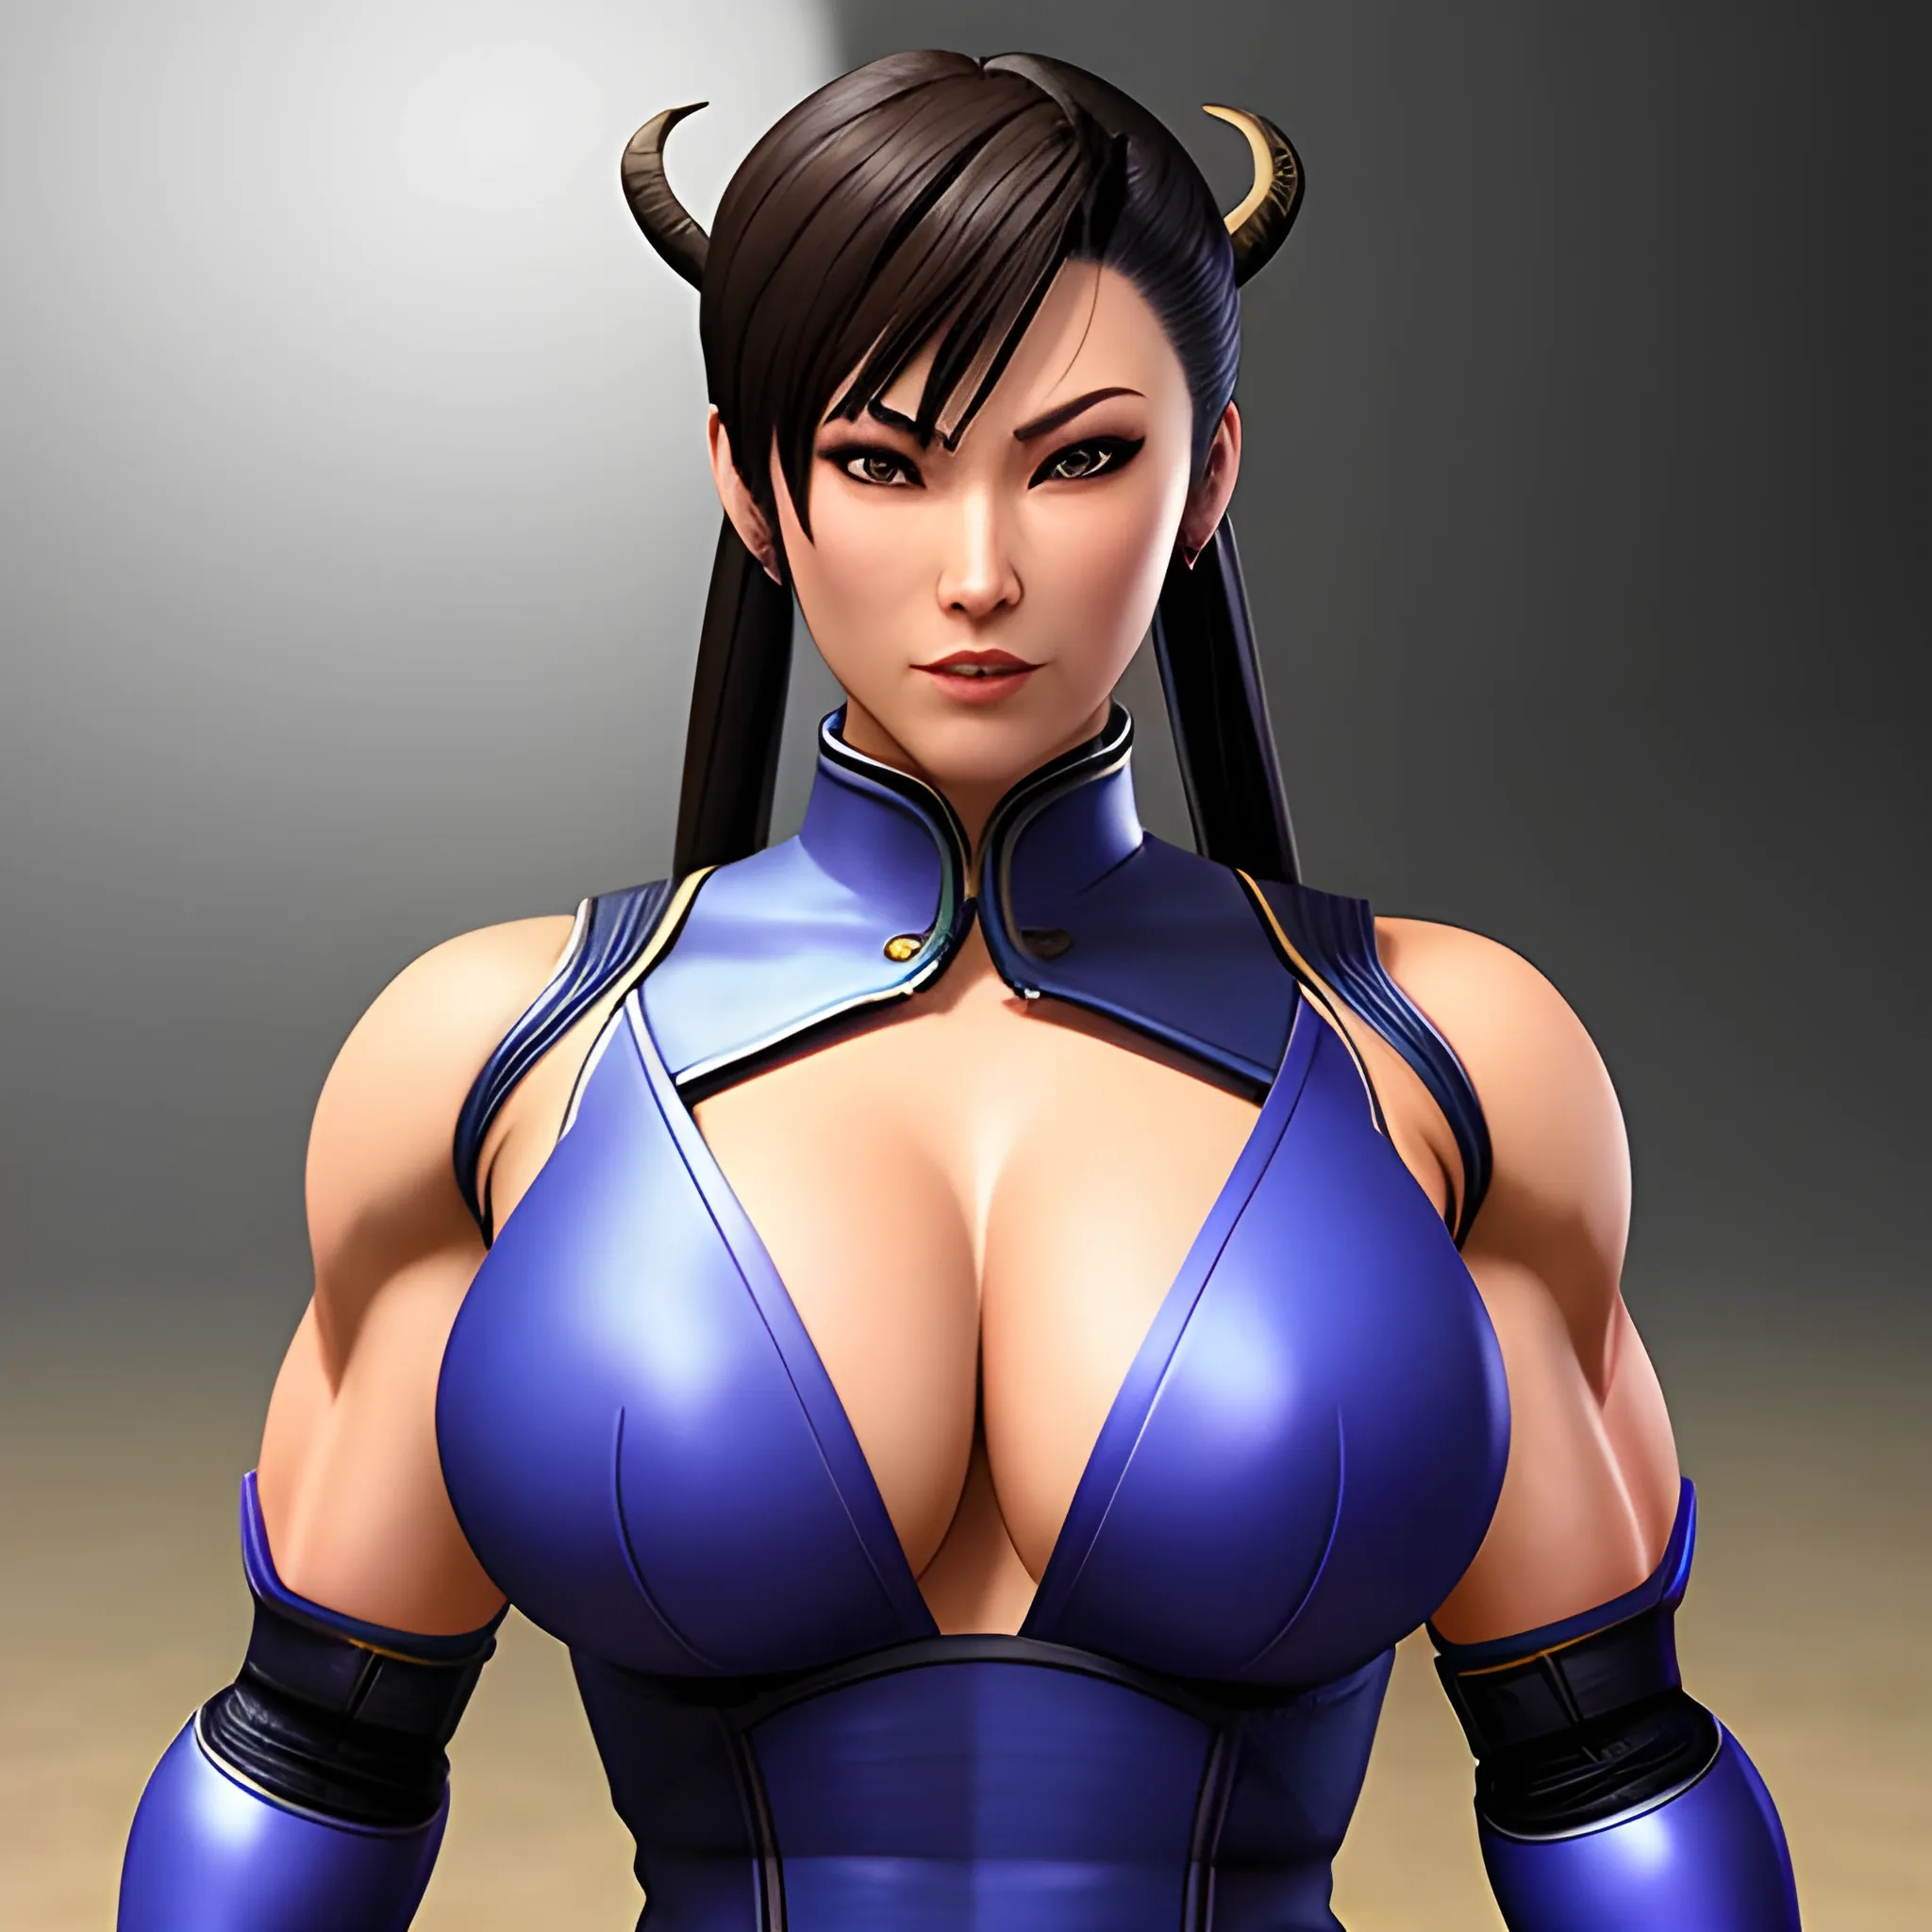 Chun li x raiden shogun  soft features , 3d, realistic,  2girls